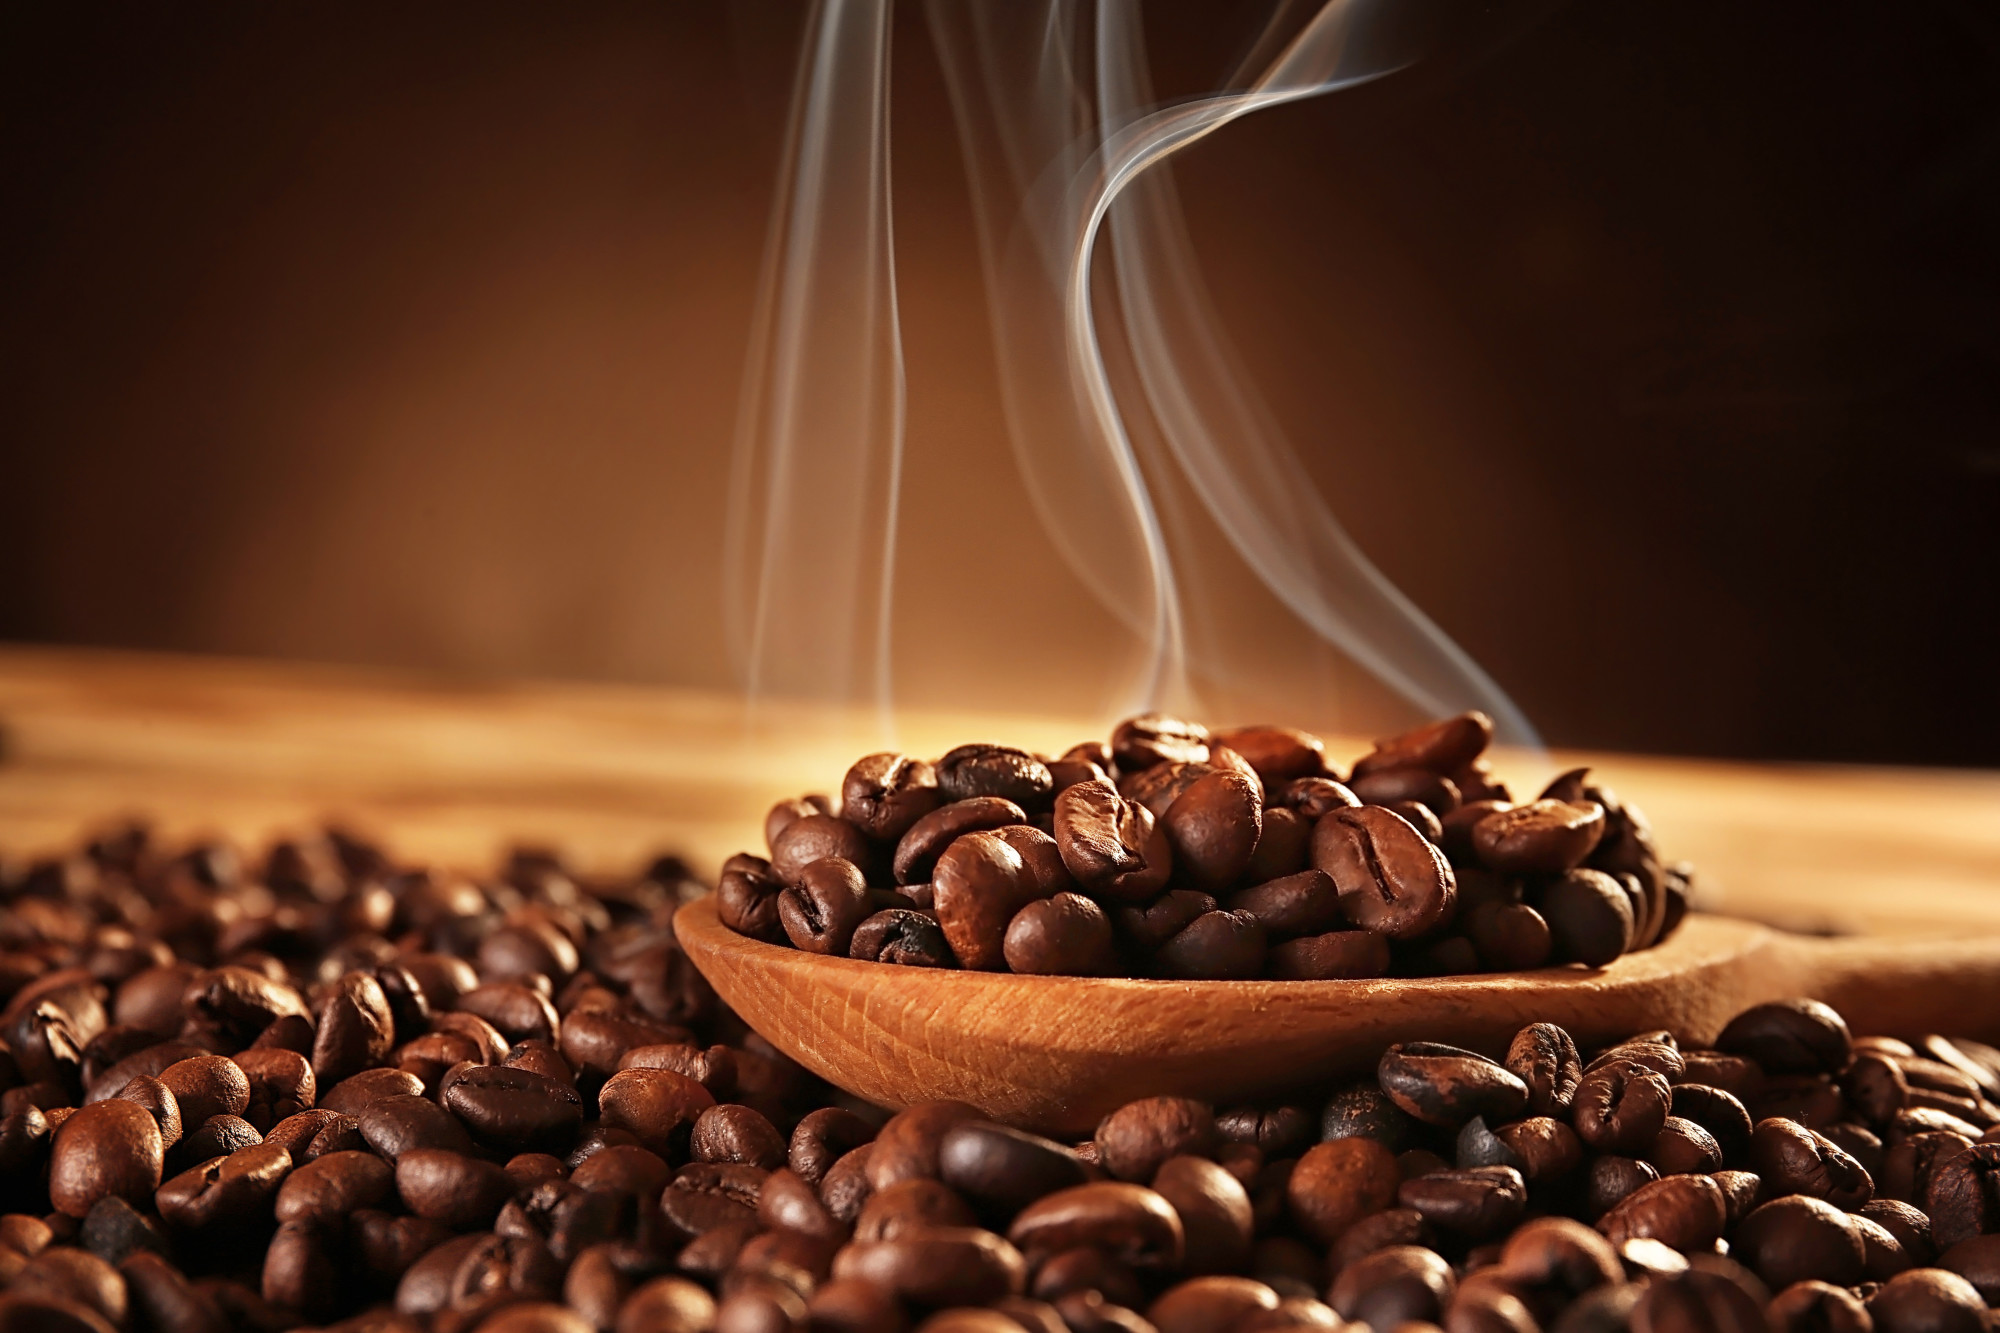 https://www.briskcoffee.com/wp-content/uploads/2021/12/commercial-coffee-program-.jpeg